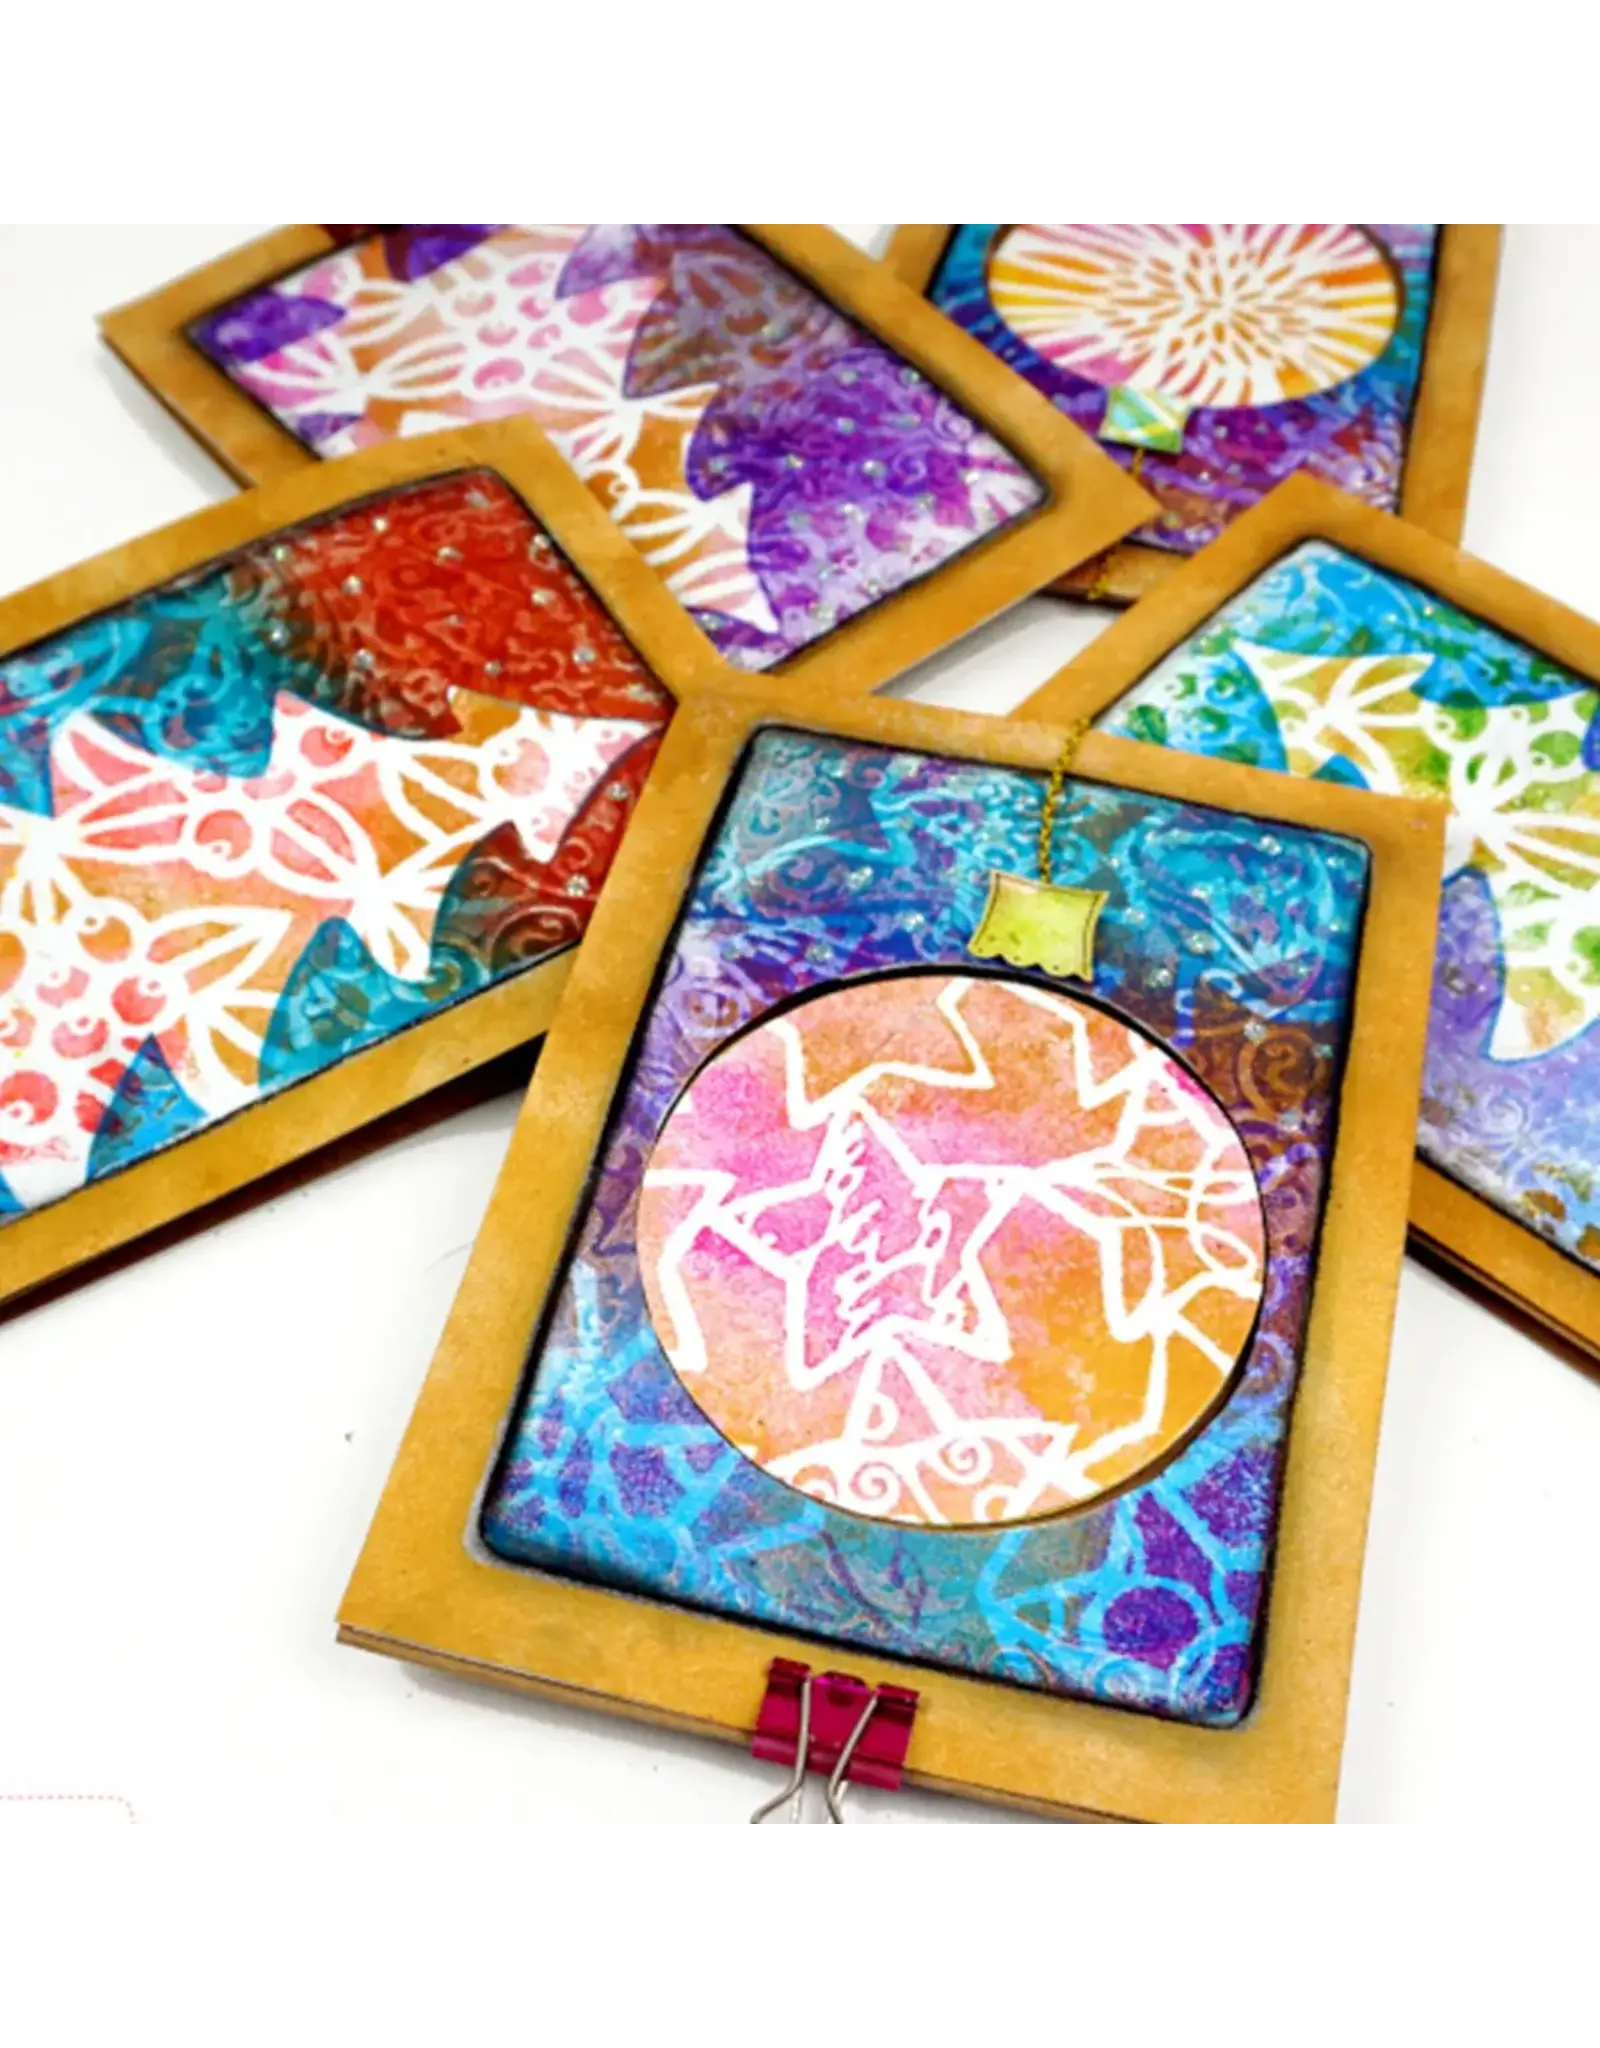 GELLI ARTS GELLI ARTS PERFECT BORDERS GEL PRINTING PLATE CREATE 5x7 CARDS & MORE!